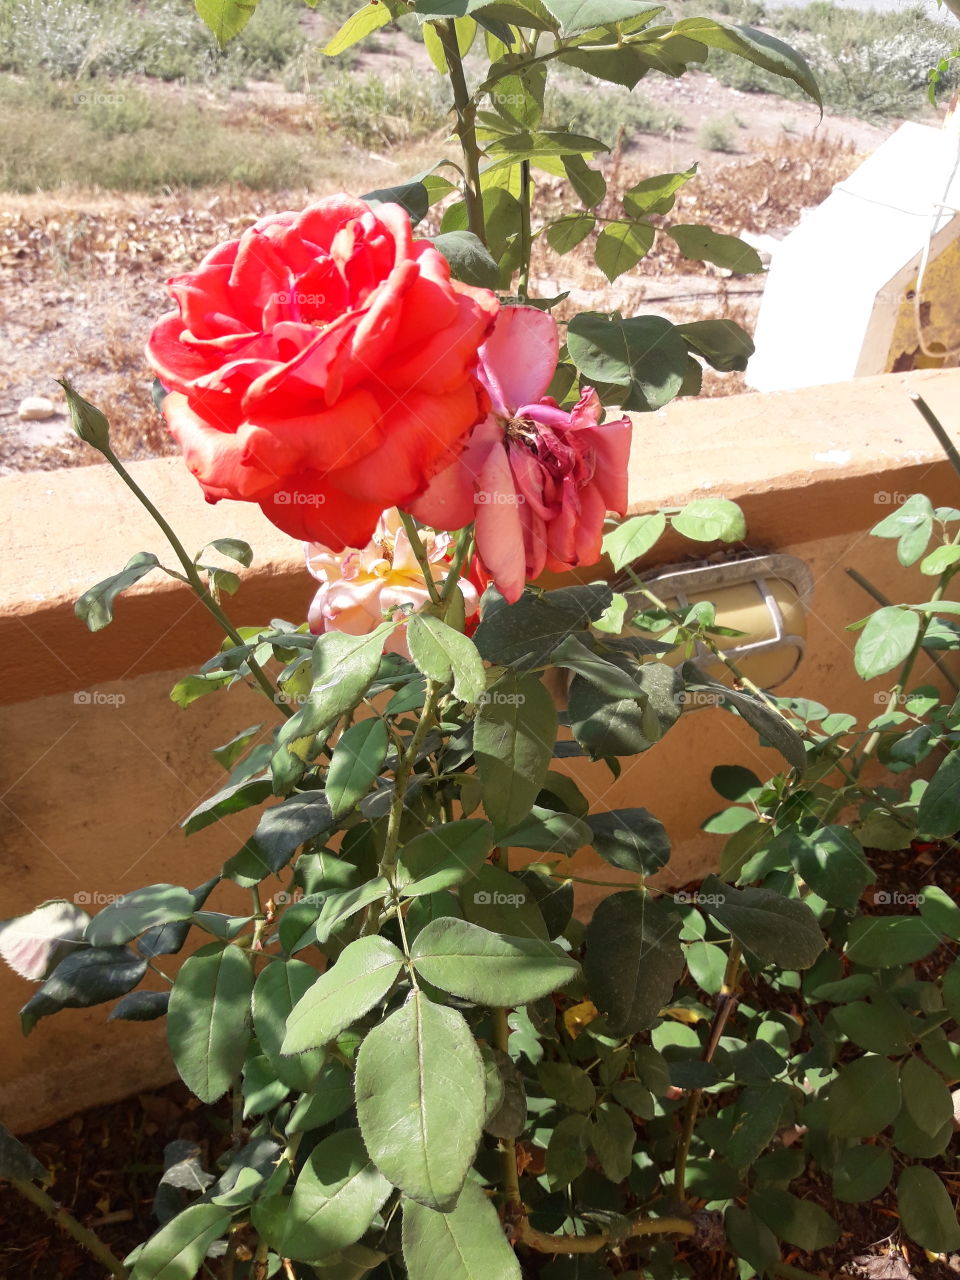 red rose